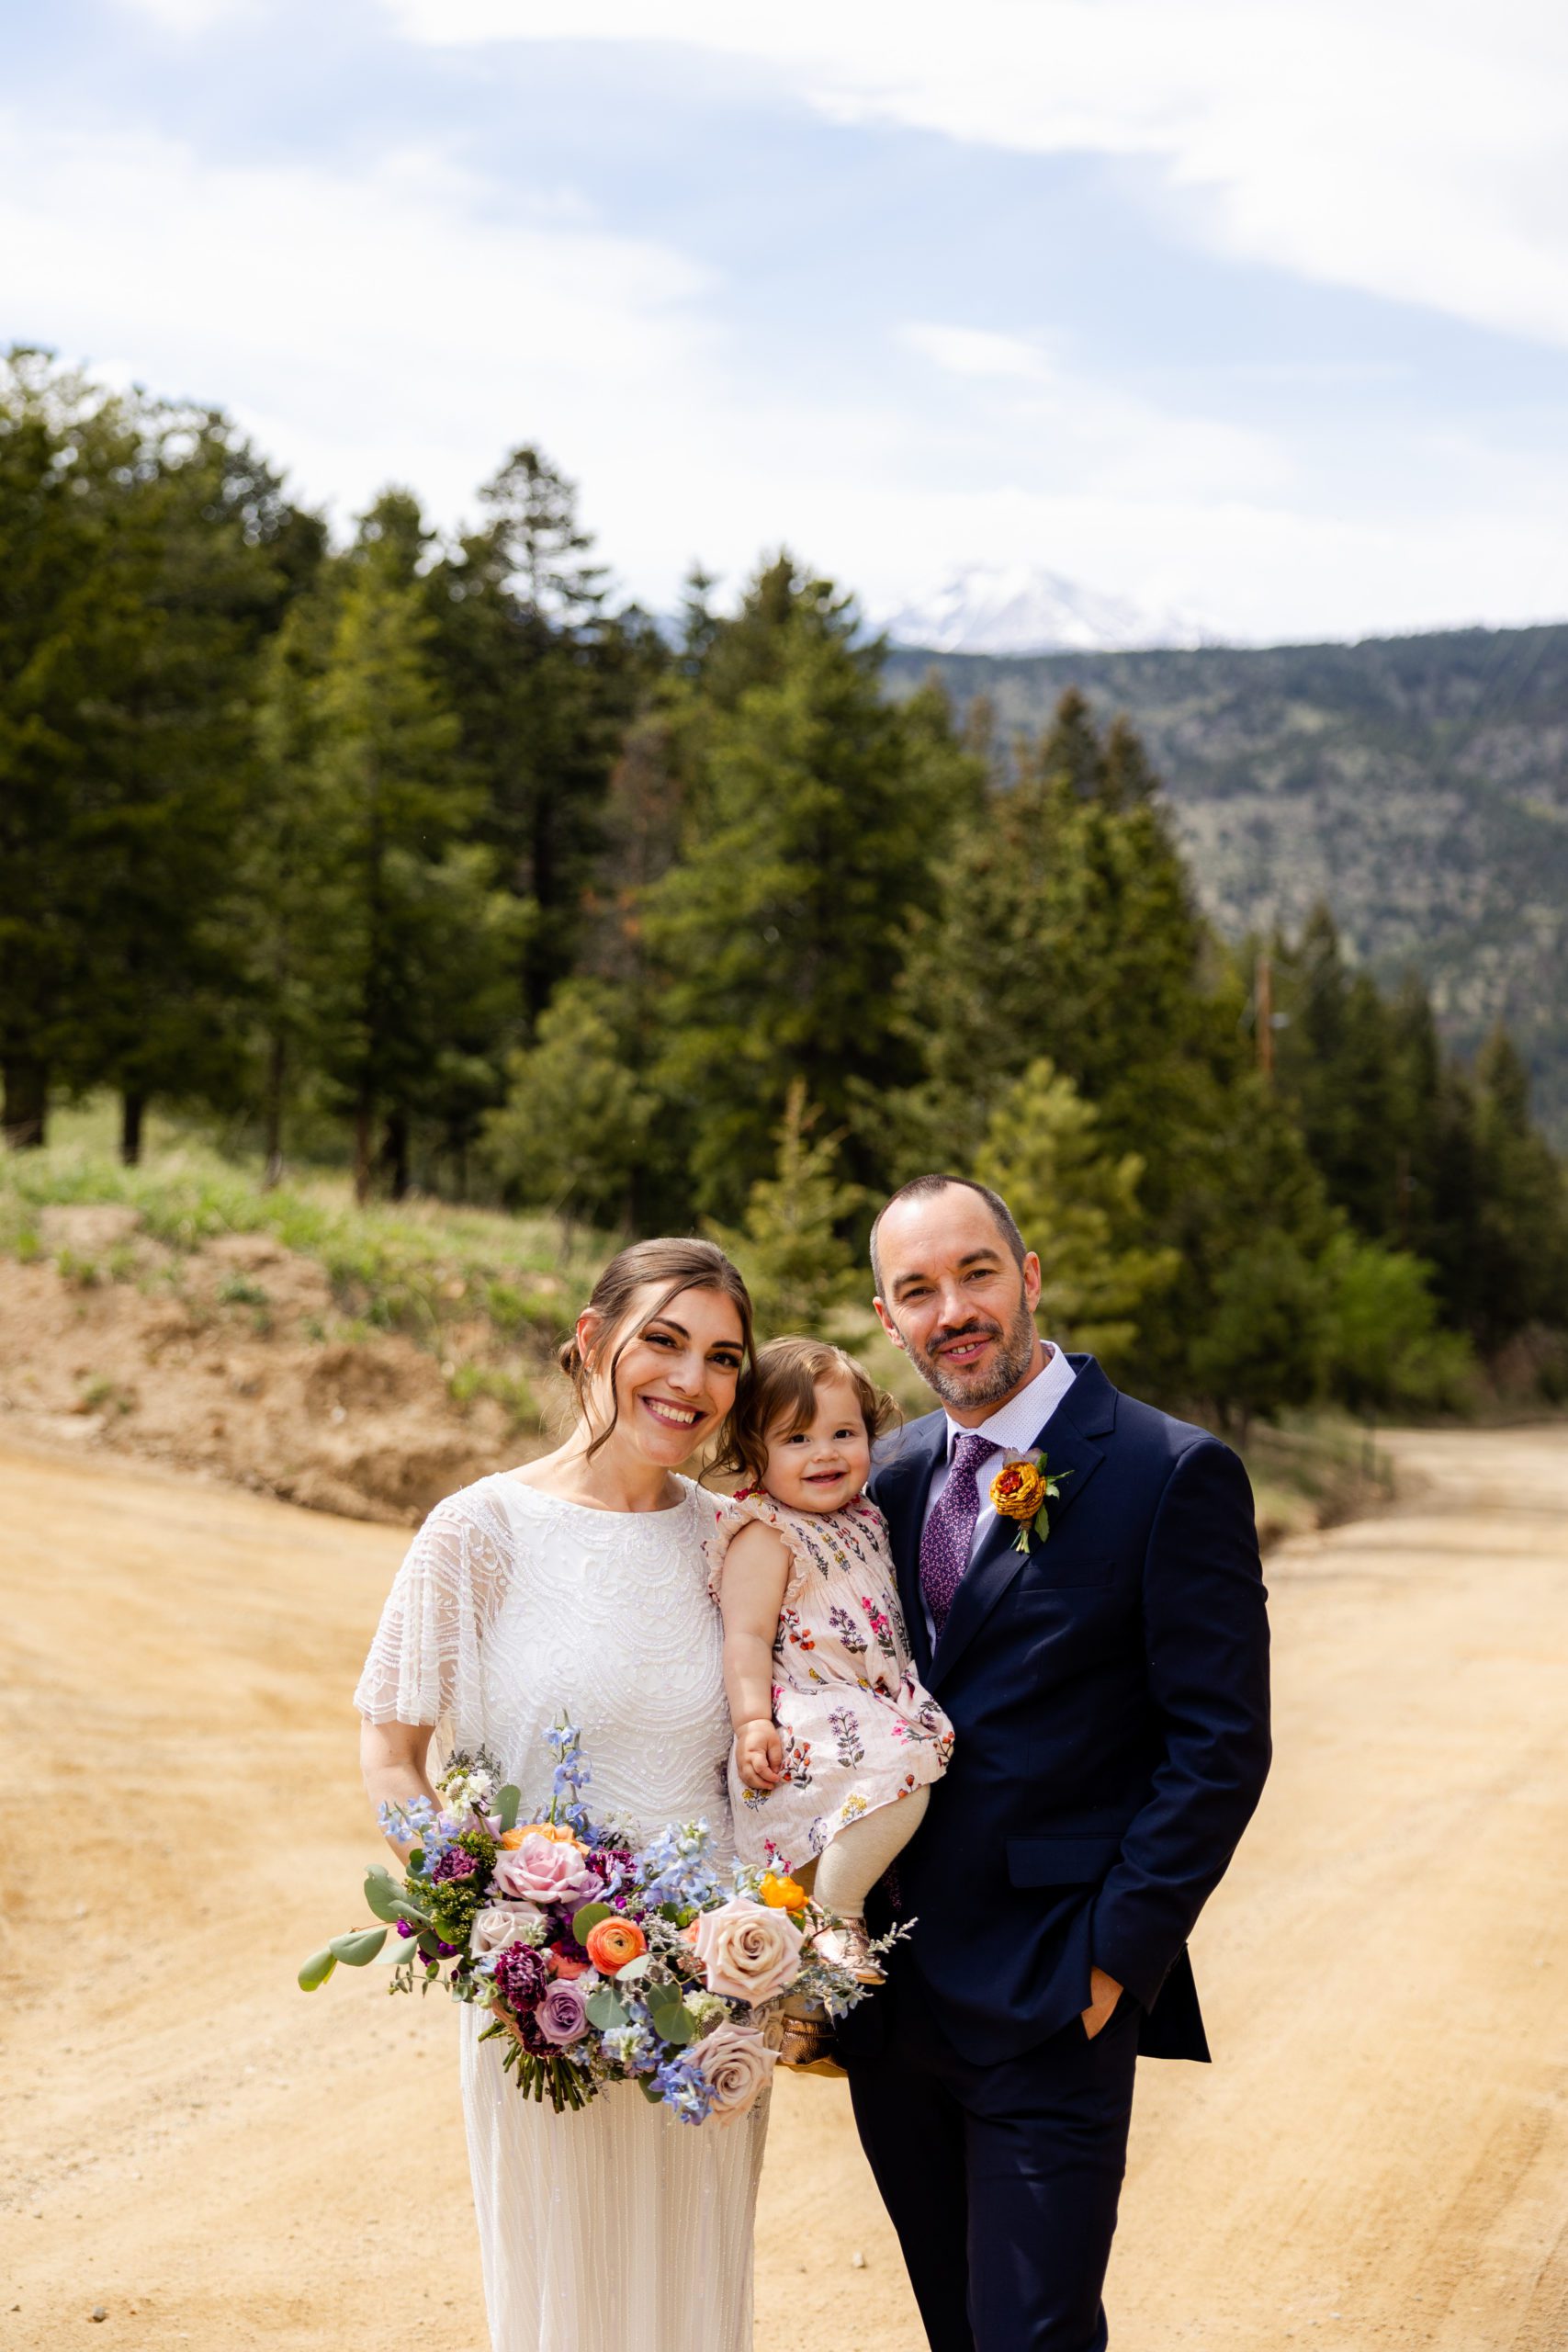 Gold Hill Inn Boulder Colorado Bride and Groom wedding photos, BHLDN, A Florae